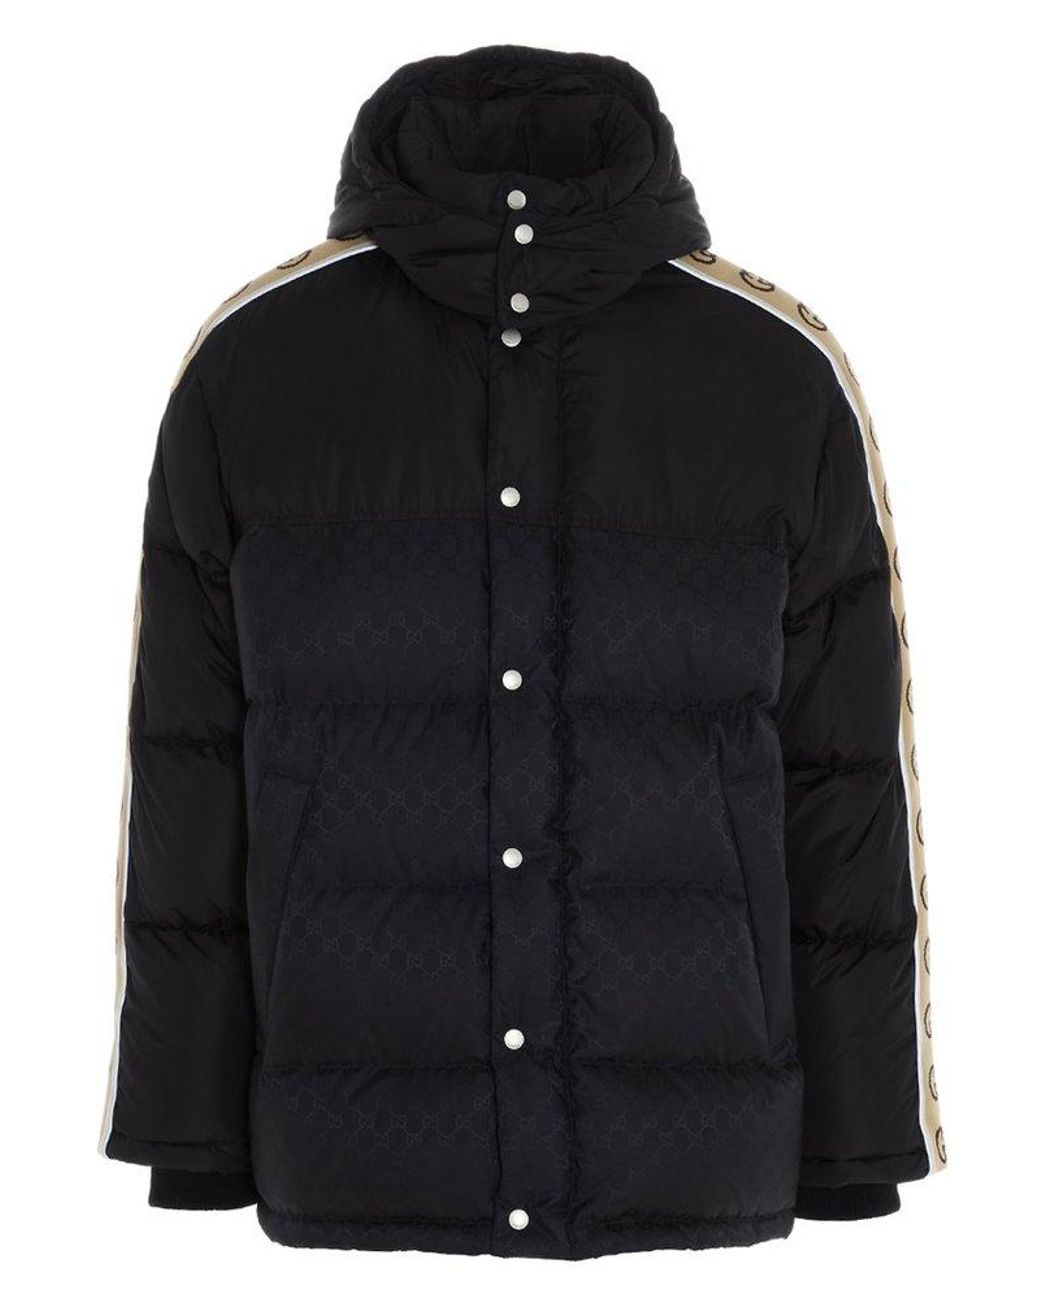 Gucci GG Jacquard Padded Coat in Black for Men | Lyst